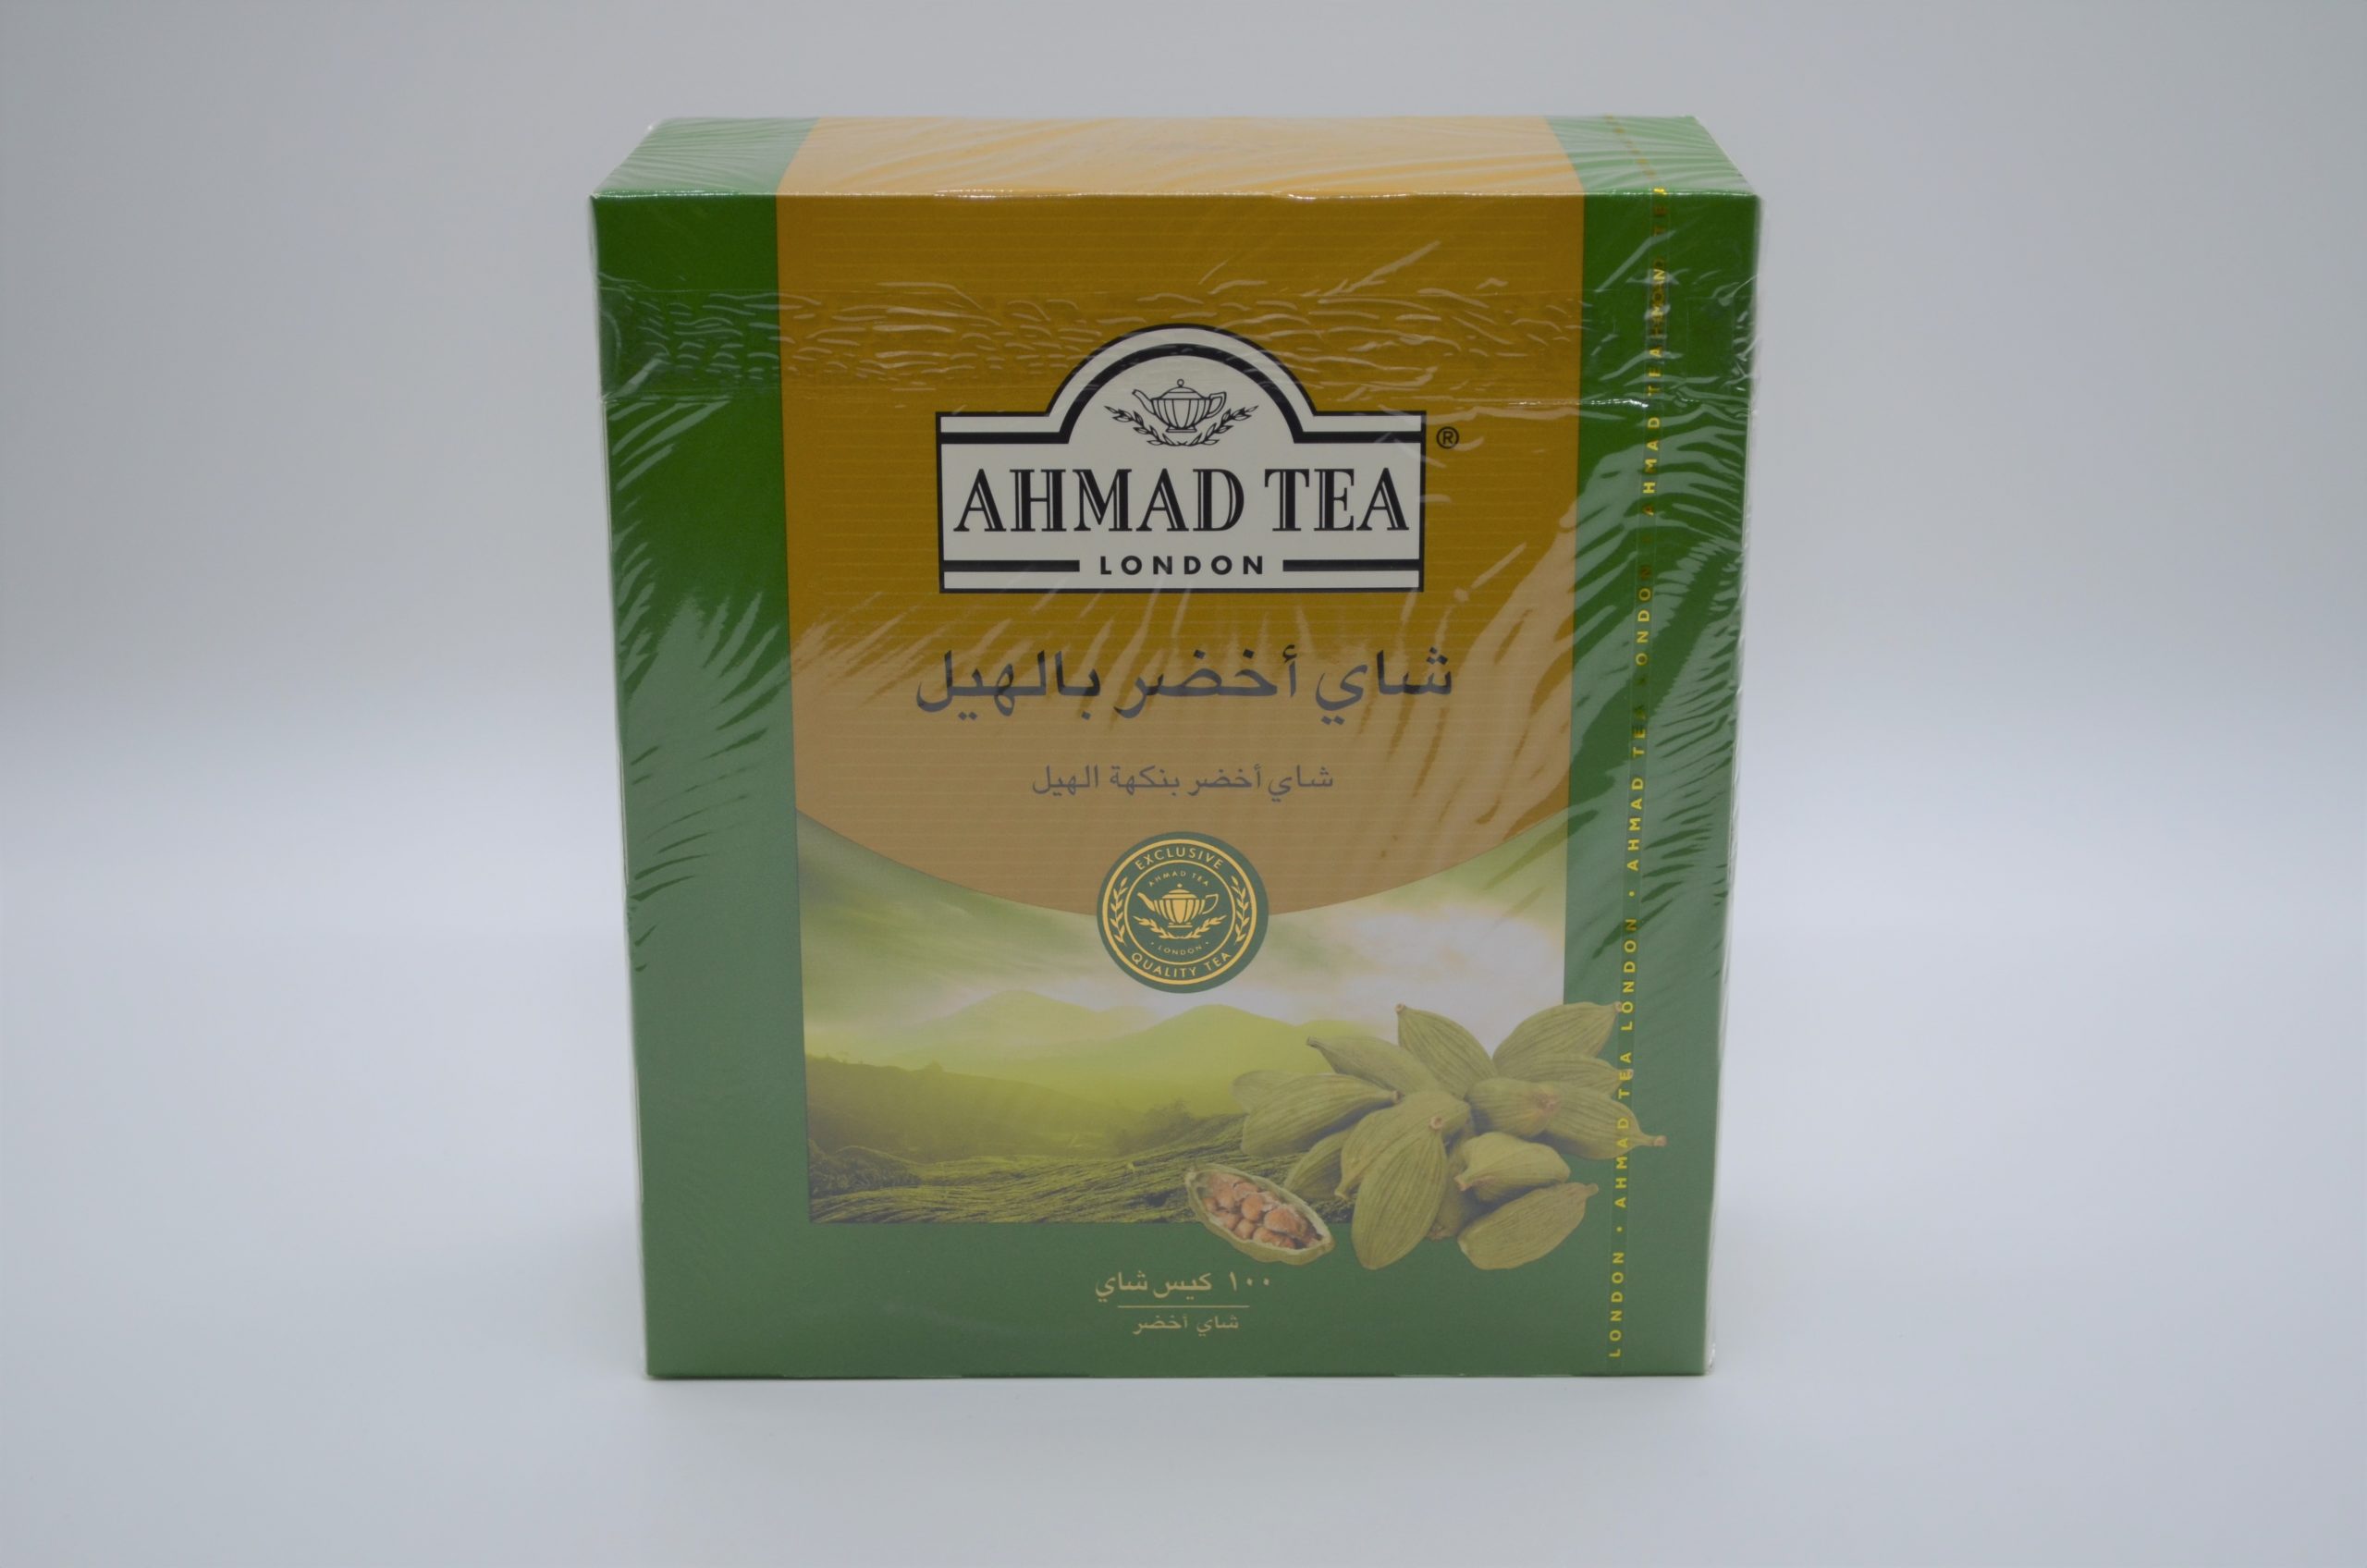 Ahmad Tea Cardamom Green Tea (Pack of 3), Pack of 3 - Jay C Food Stores